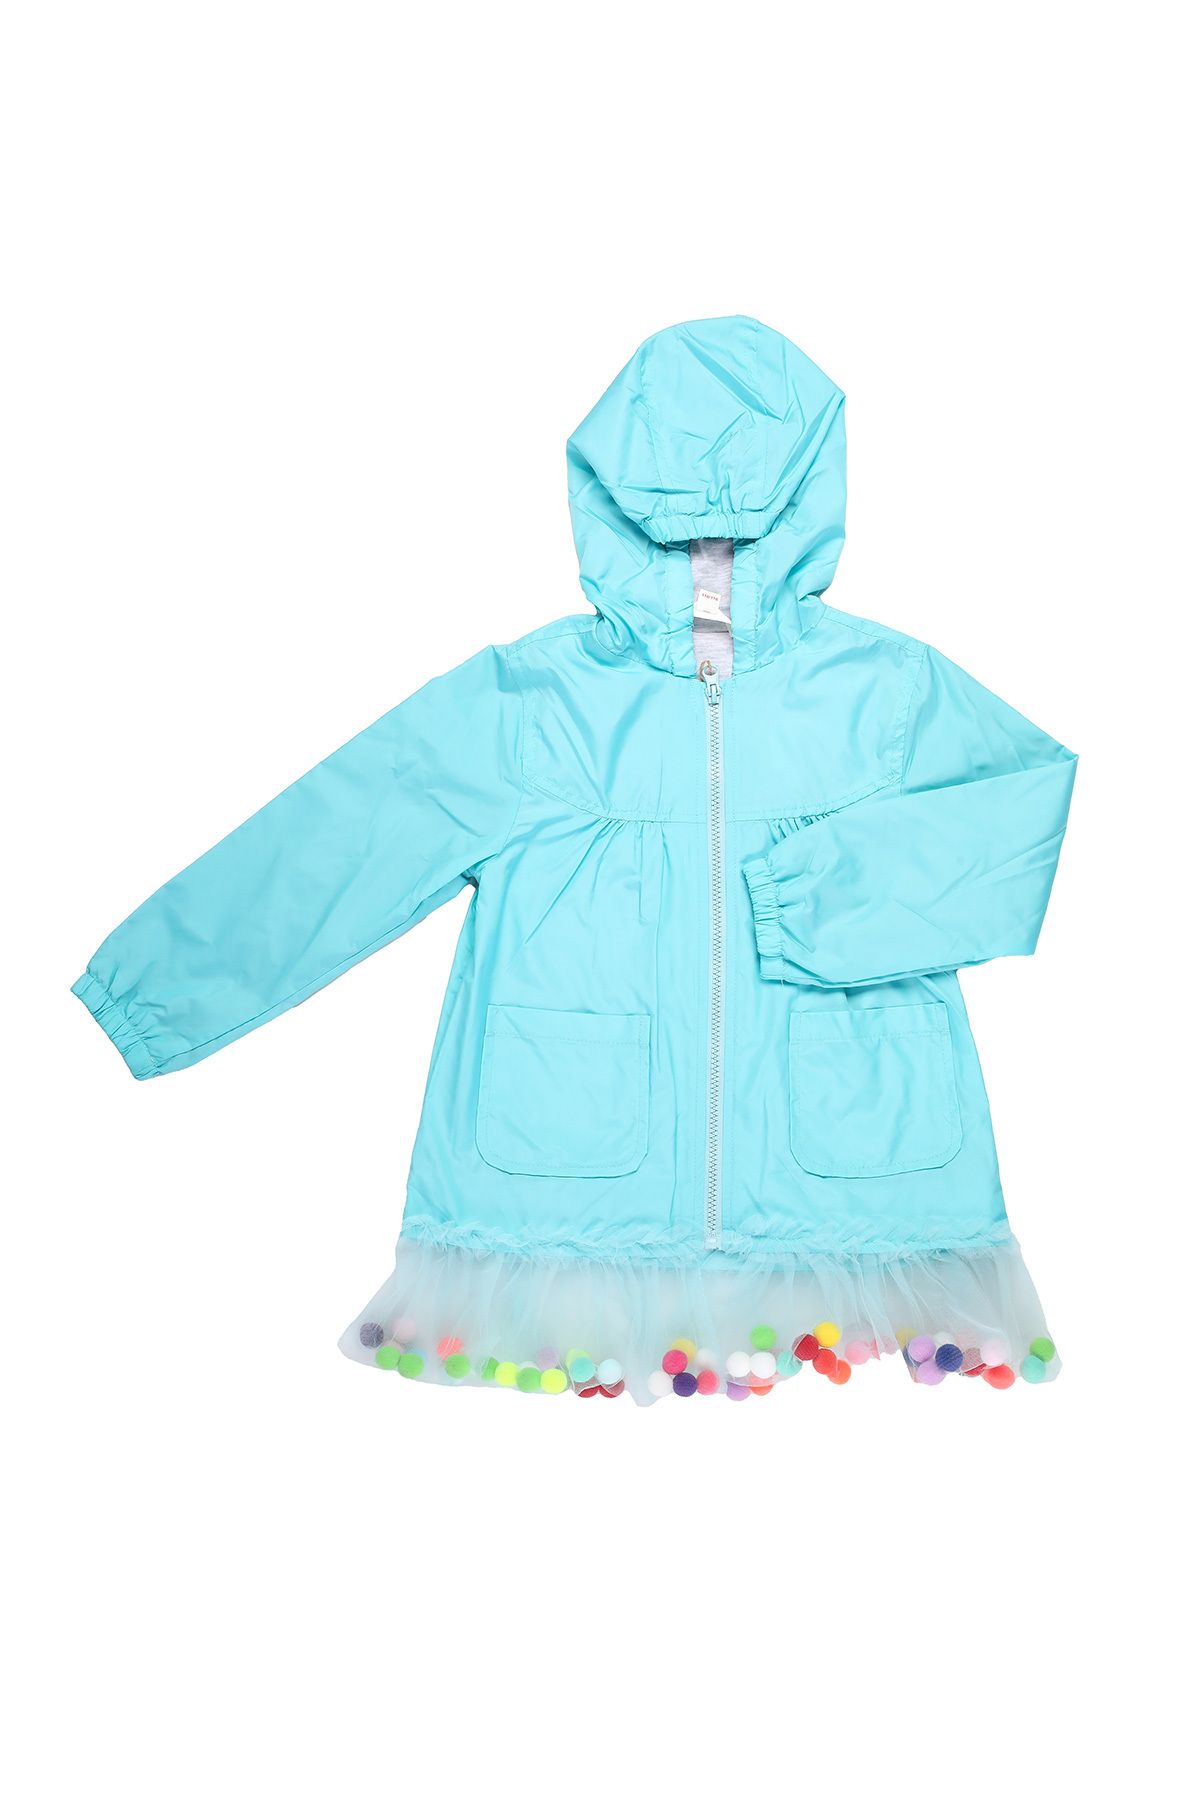 MİMBOKİDS Mimbo Kids Kız Çocuk Turkuaz Renkli Ponponlu Yağmurluk